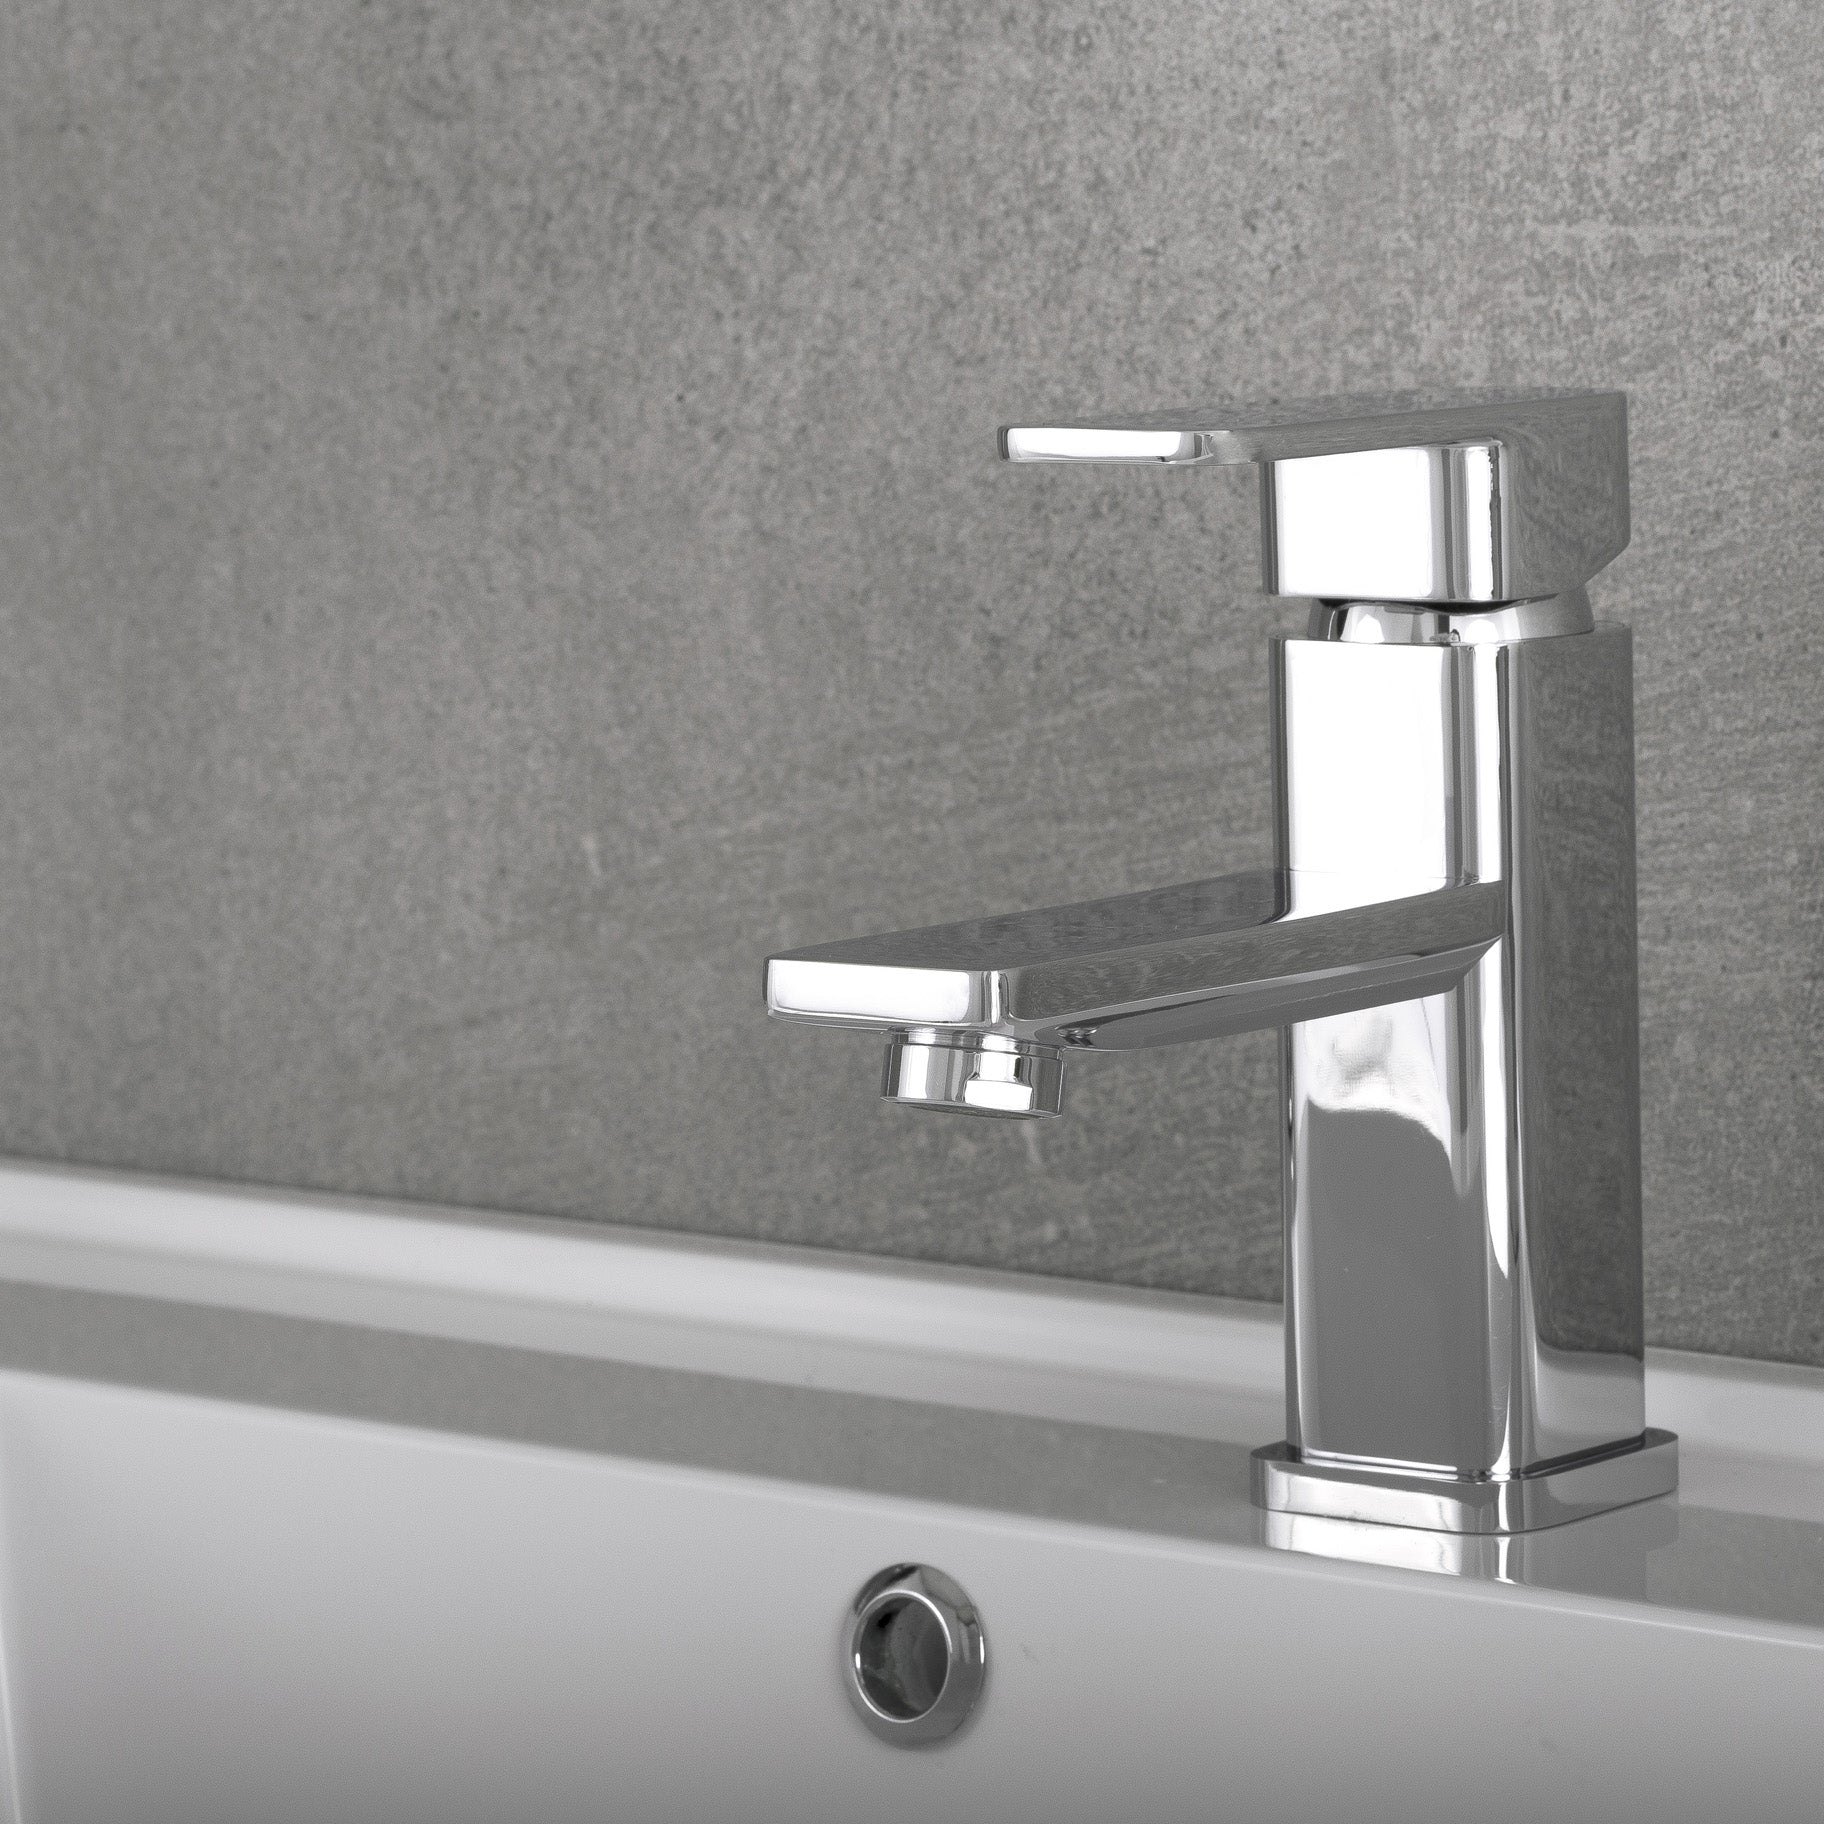 DAX Single Handle Bathroom Faucet, Brass Body, Chrome Finish, 5-15/16 x 6-1/8 Inches (DAX-8510-CR)